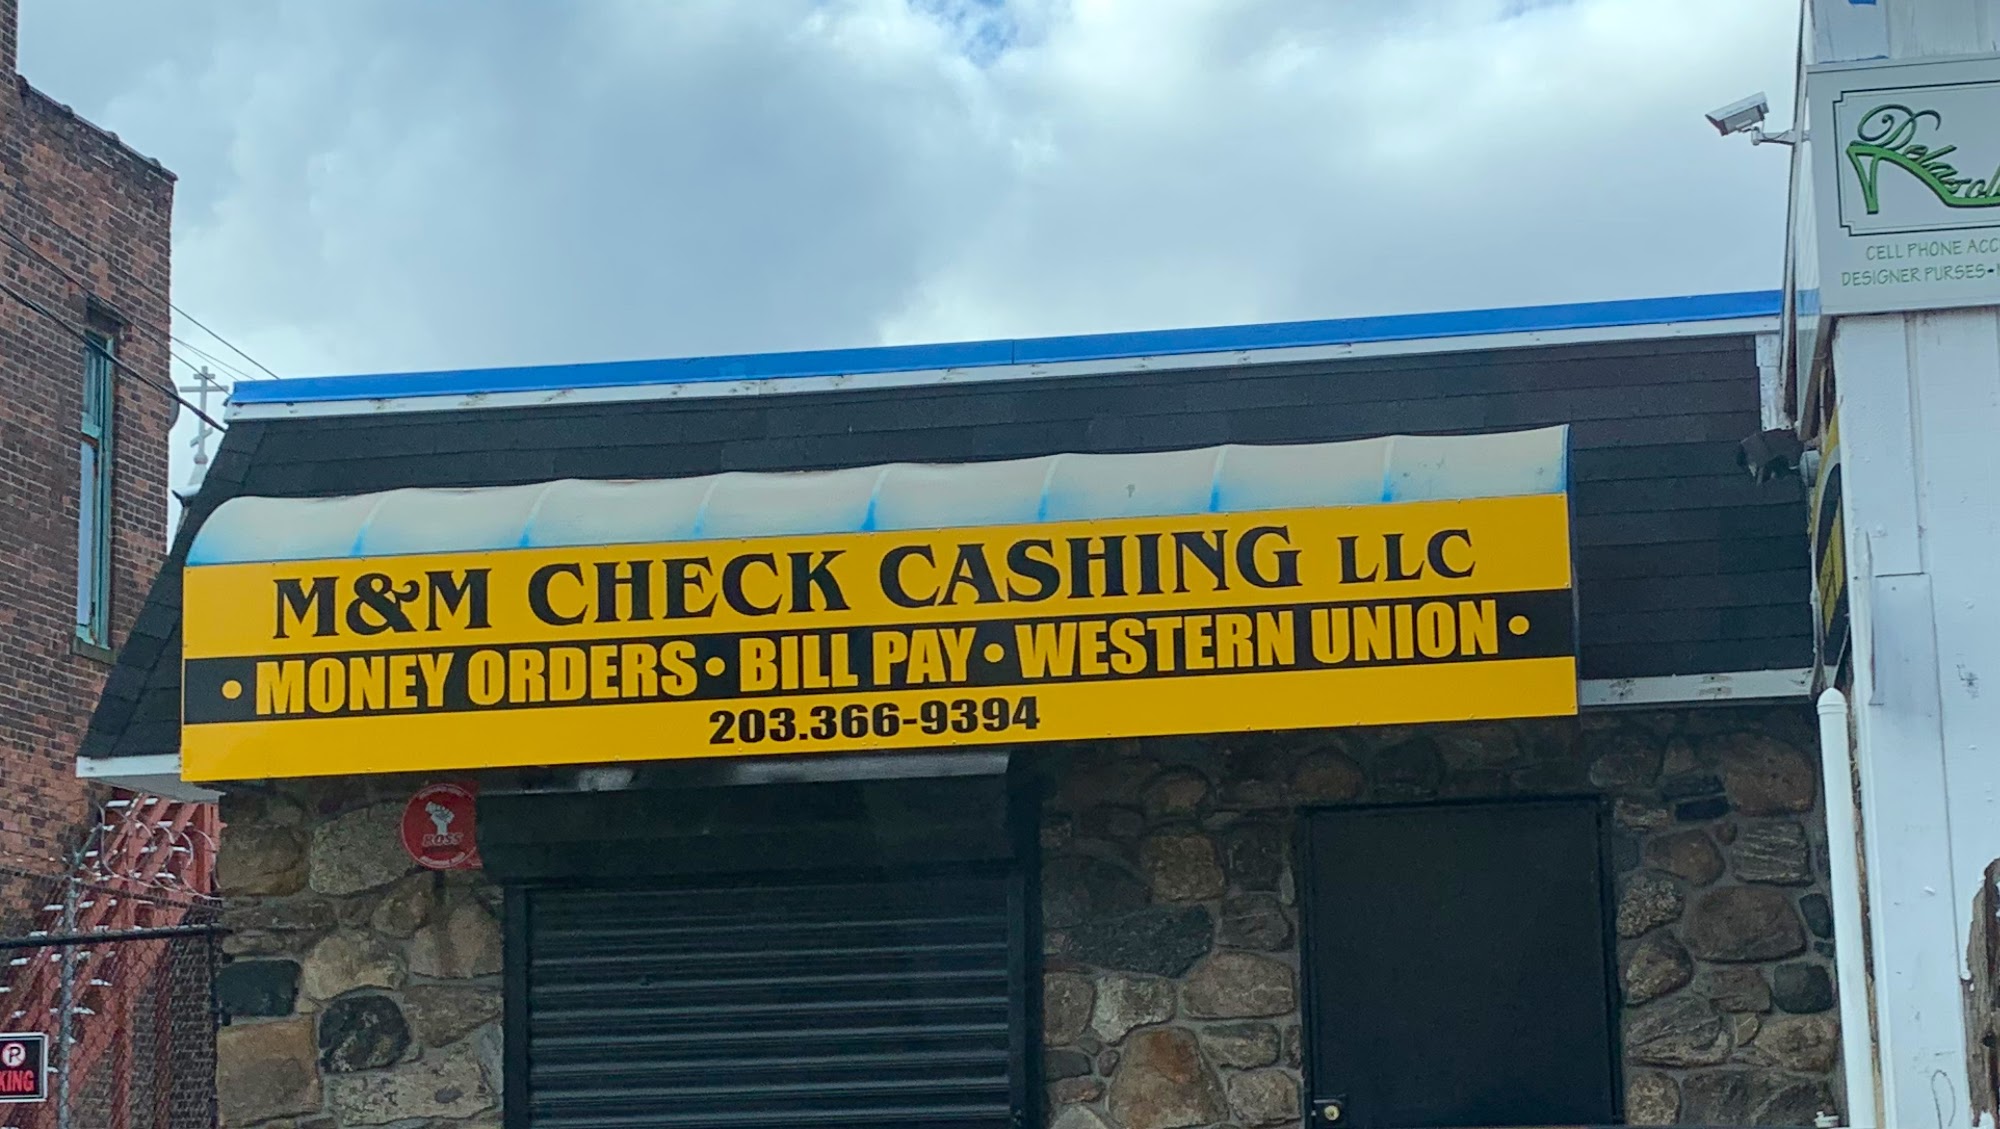 M&m CHECK CASHING LLC